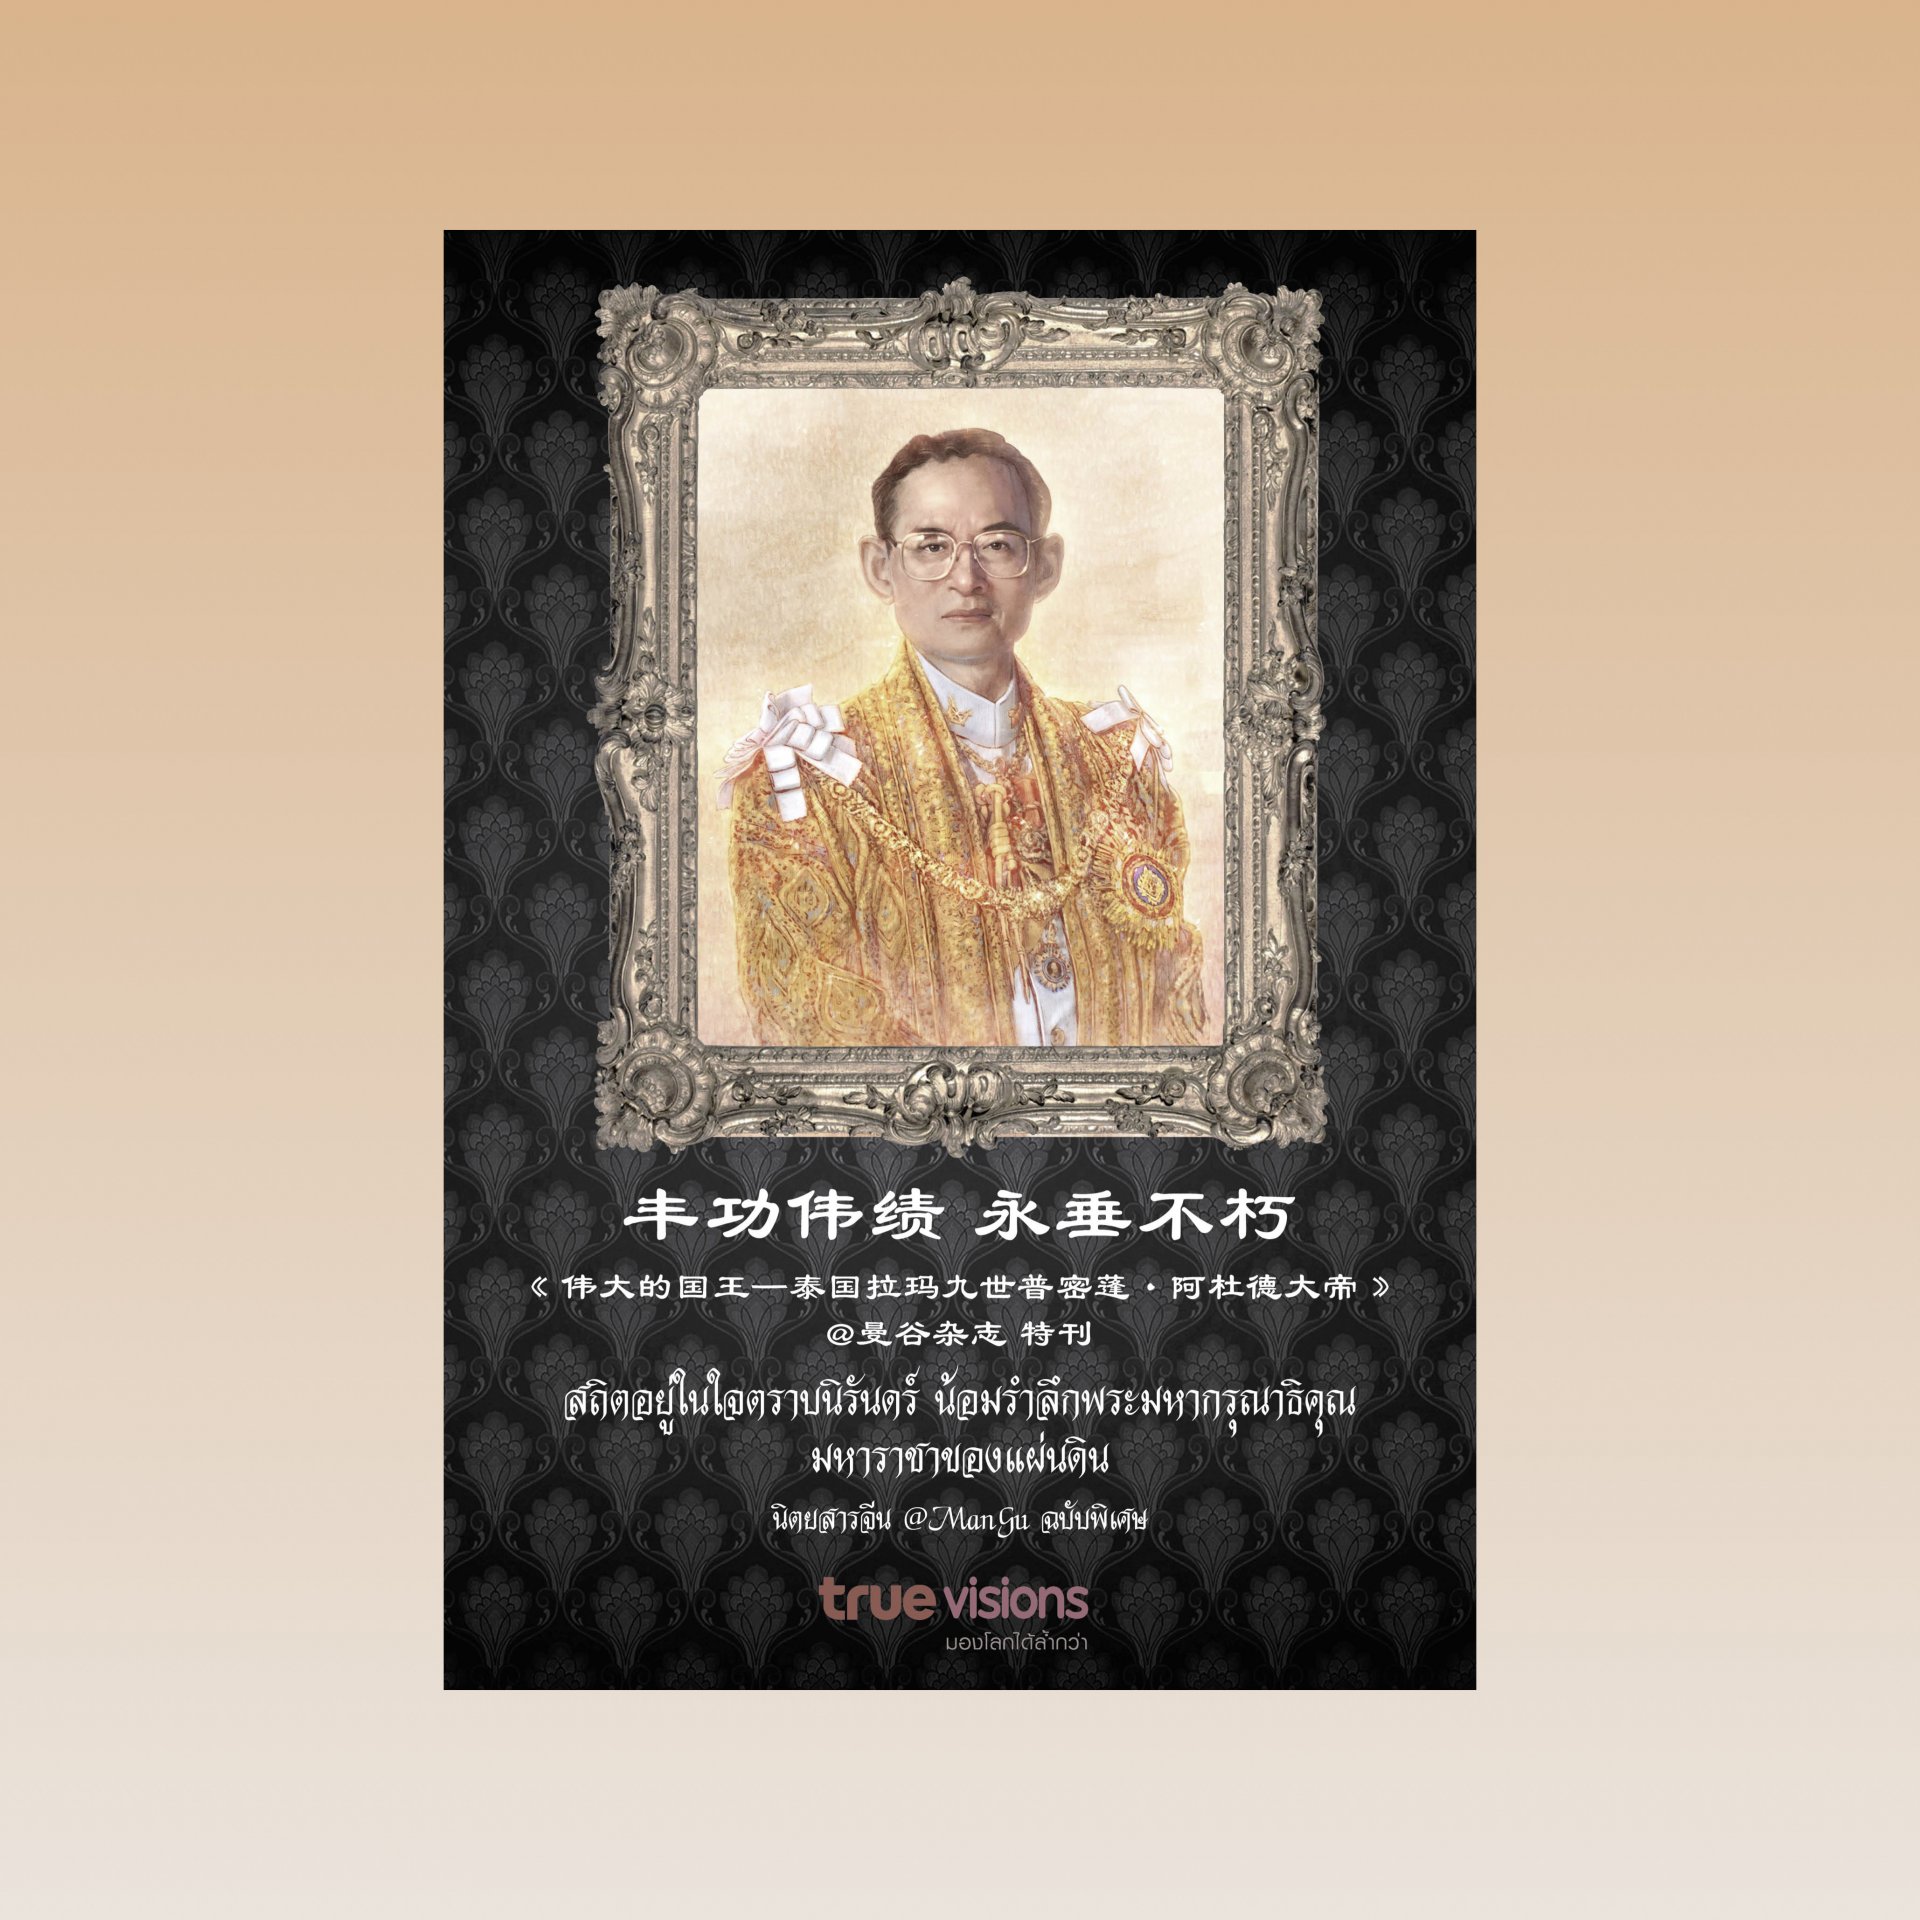 《@ManGu曼谷》杂志制作的中文特刊《伟大的国王——泰国拉玛九世普密蓬•阿杜德大帝》在全球发行